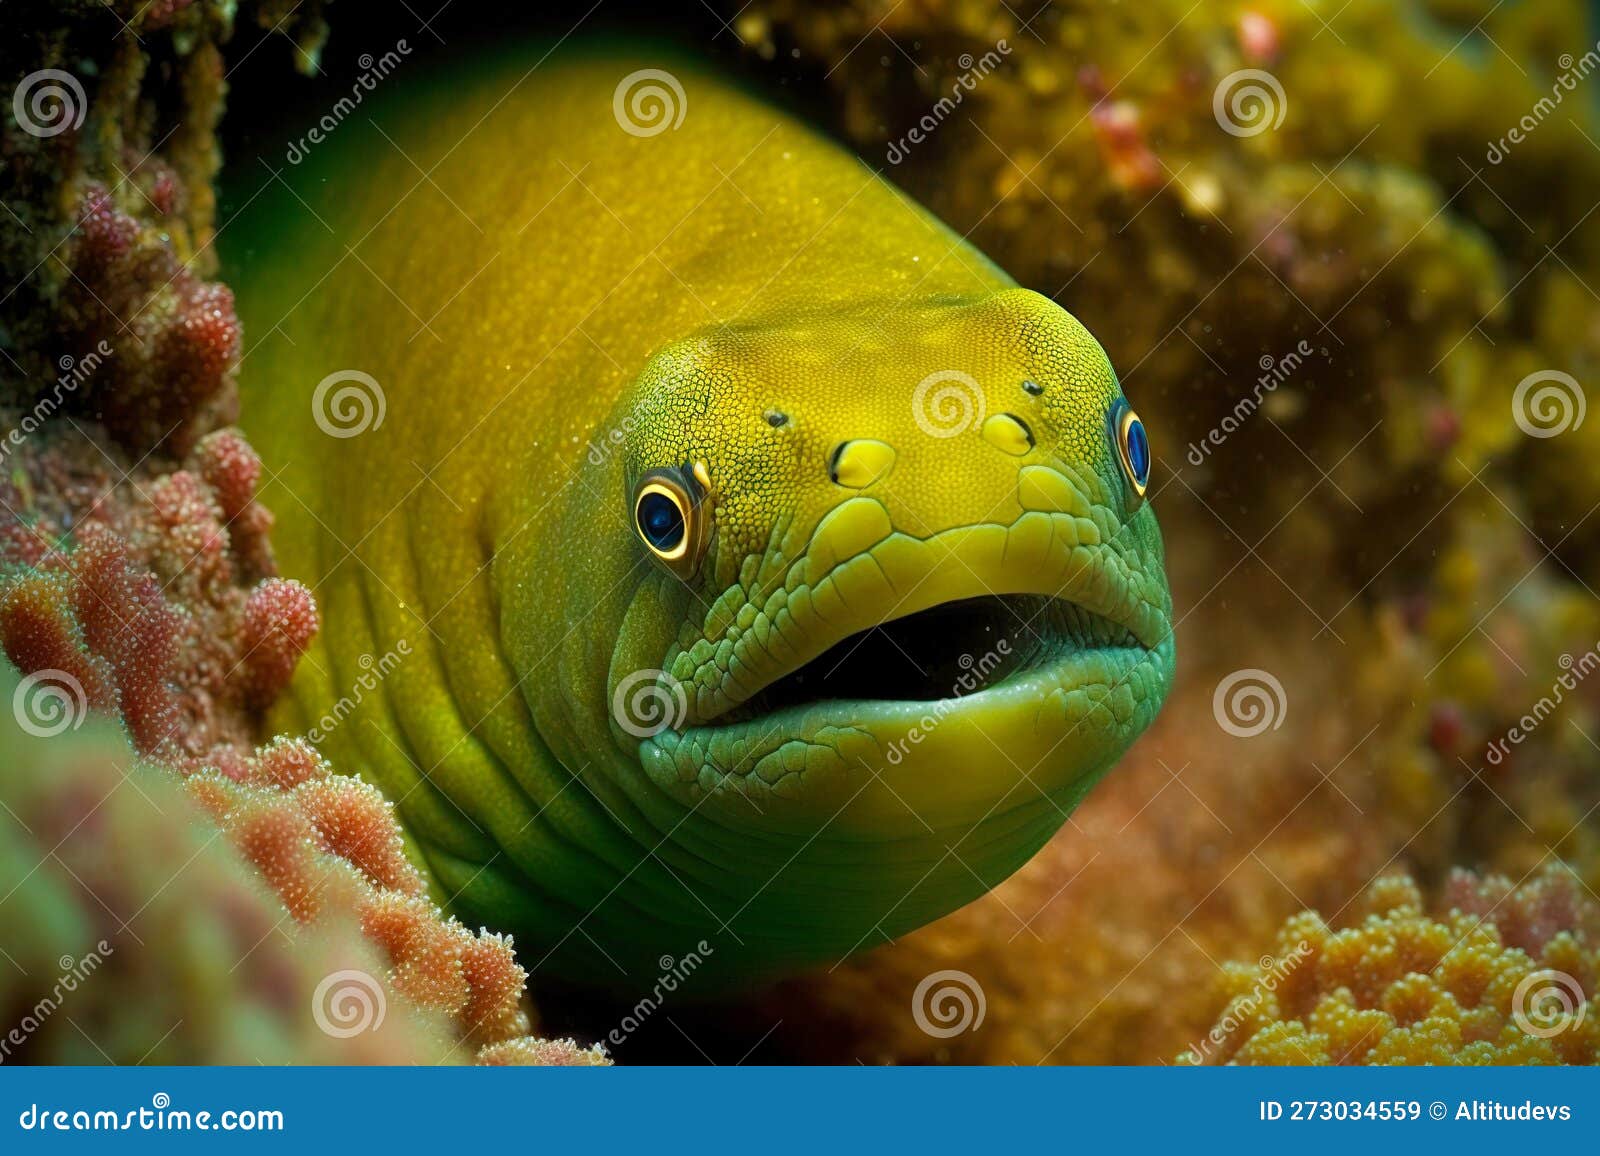 Dangerous Ocean Fish Moray Eels Sit among Reefs and Corals Stock ...